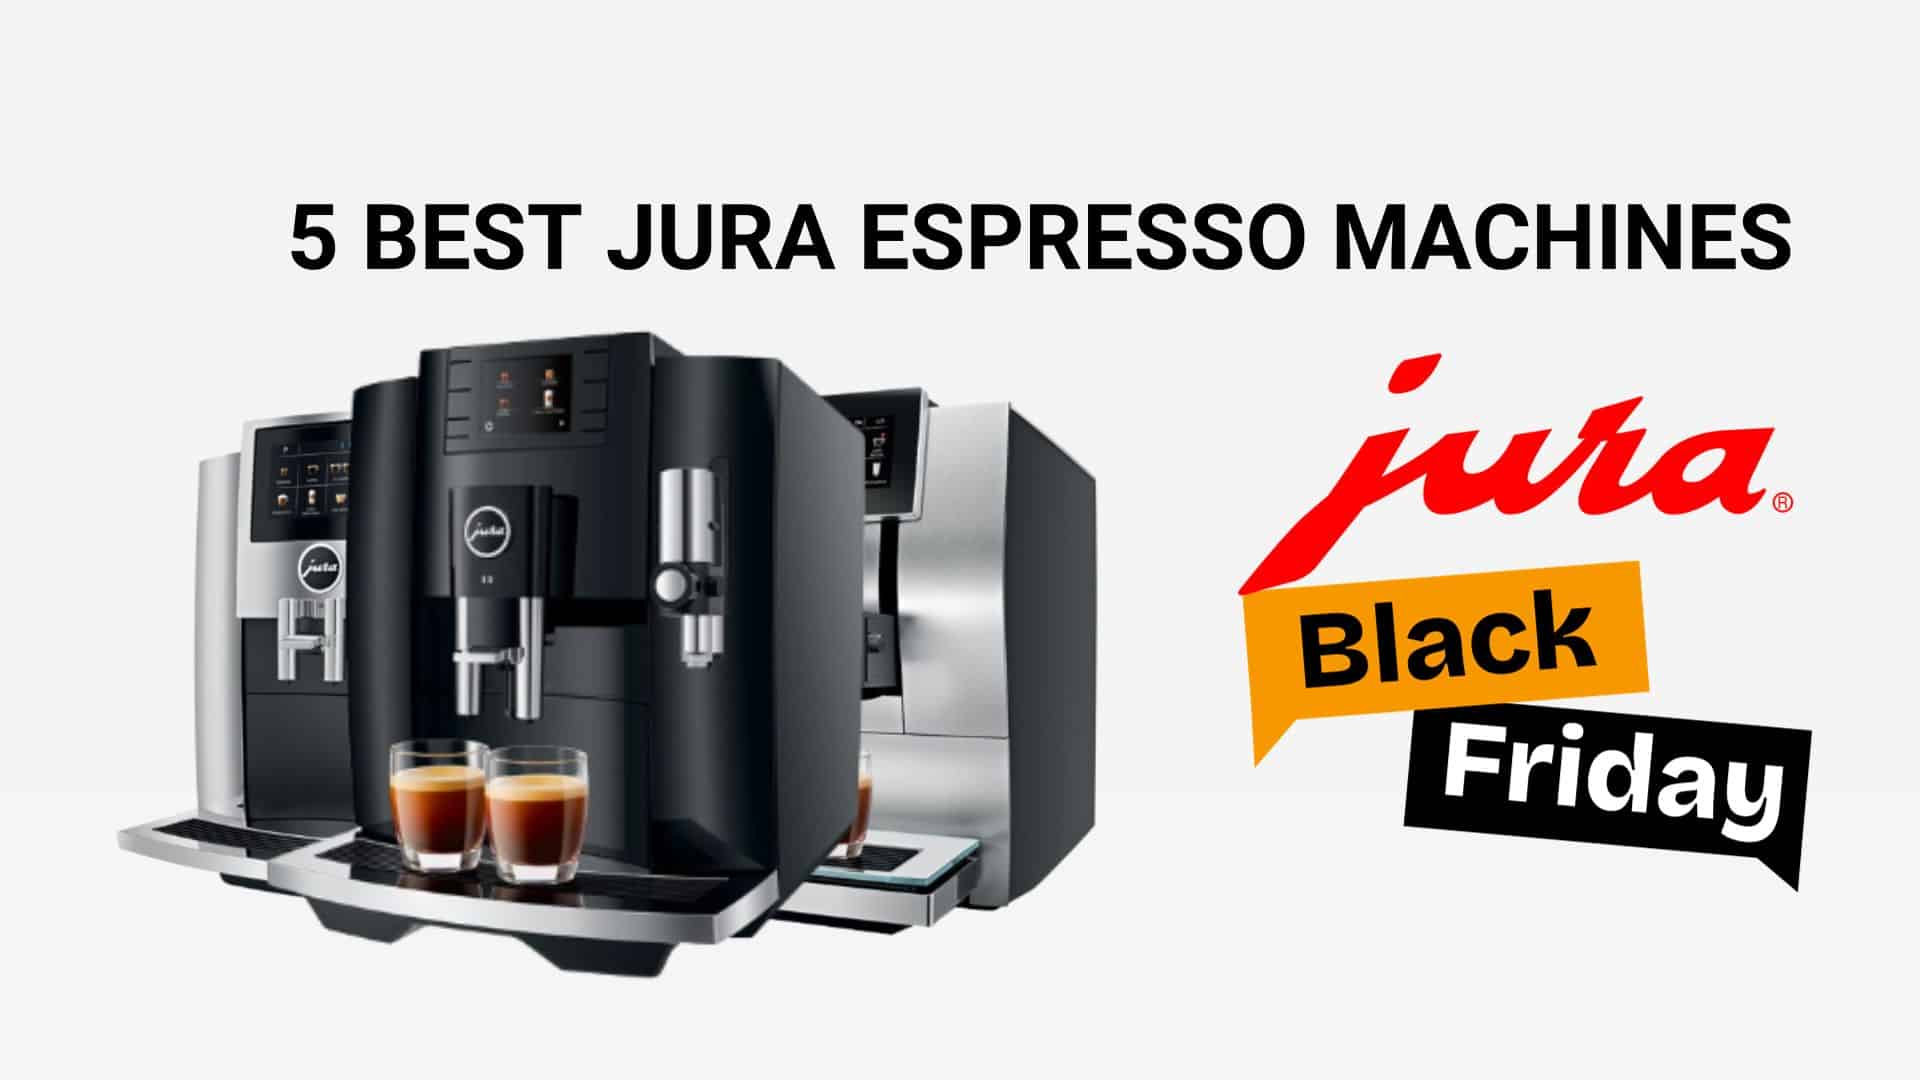 BLACK FRIDAY SALE: 5 JURA ESPRESSO MACHINES